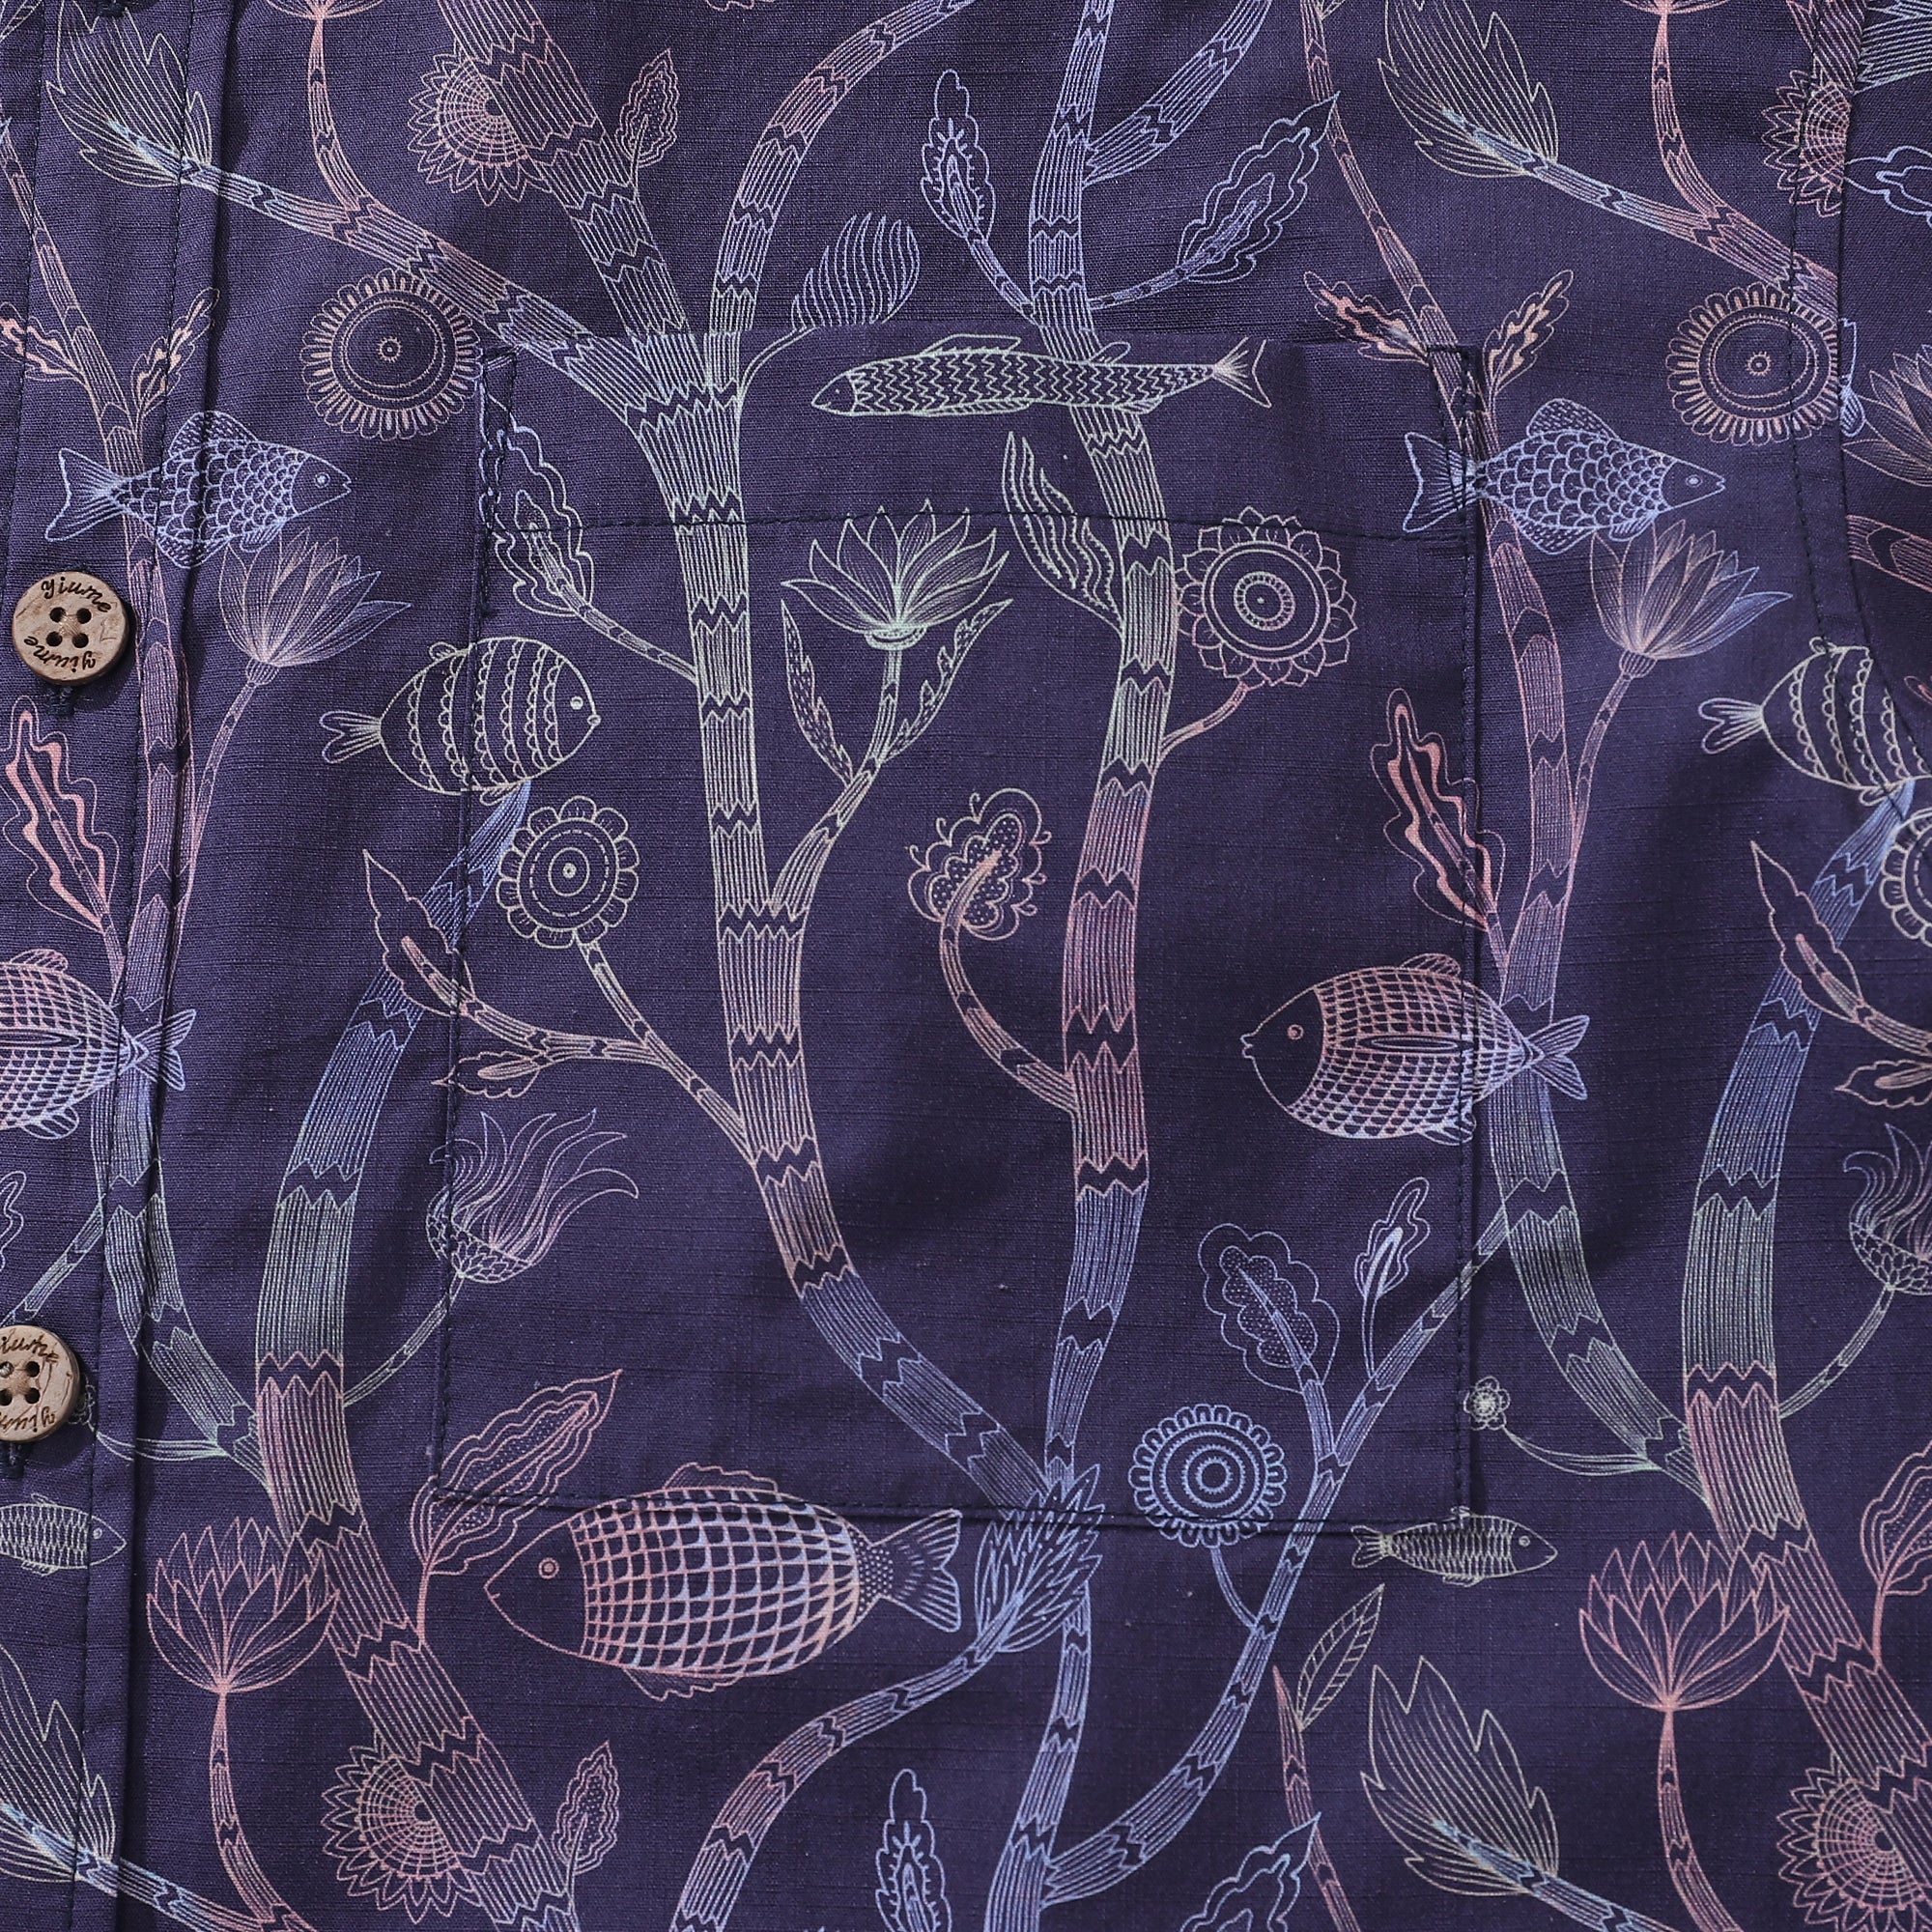 Men's Hawaiian Shirt The Fish Waltz Print Cotton Button-down Short Sleeve Aloha Shirt